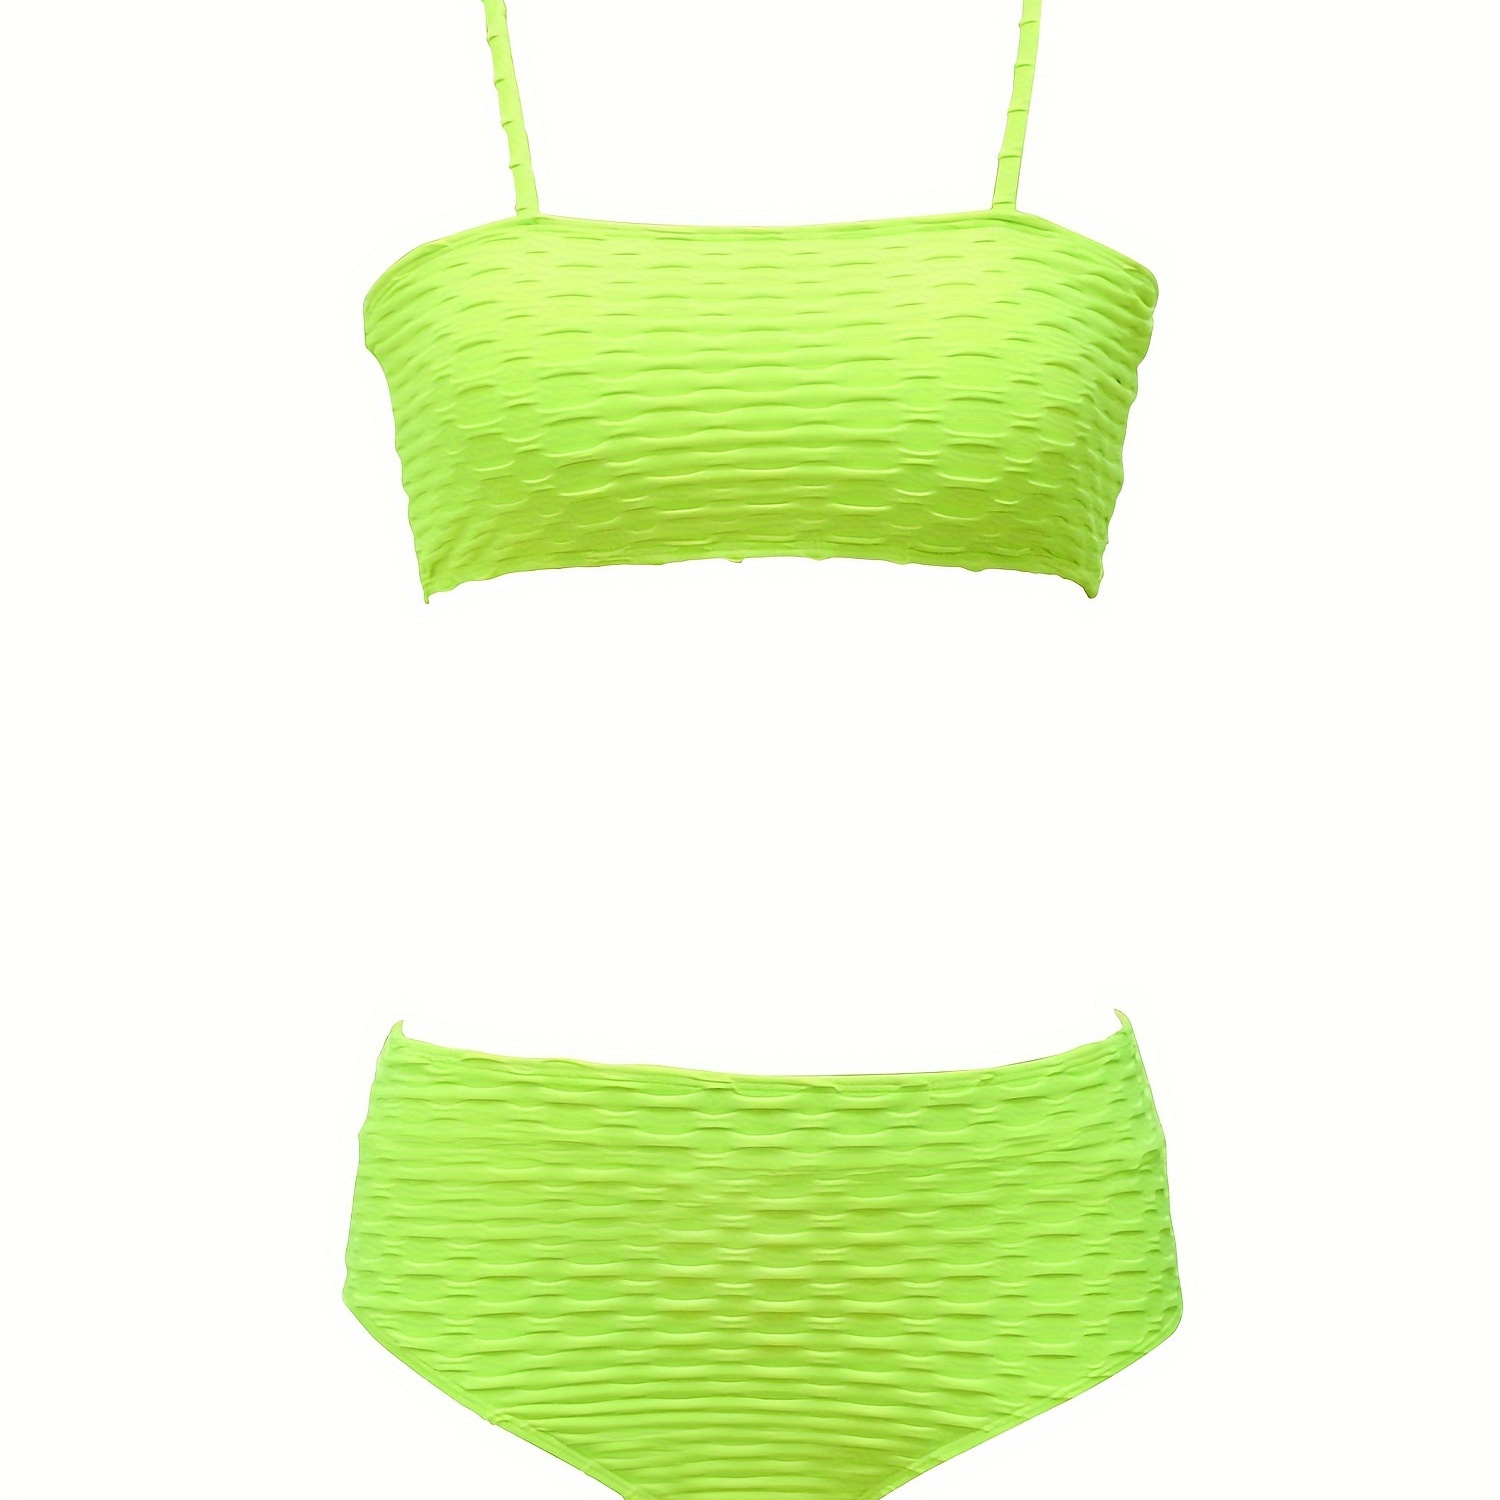 

Women's High-waisted Two-piece Bikini Set, Neon Color, Sexy Textured Swimwear, Fashionable Bathing Suit